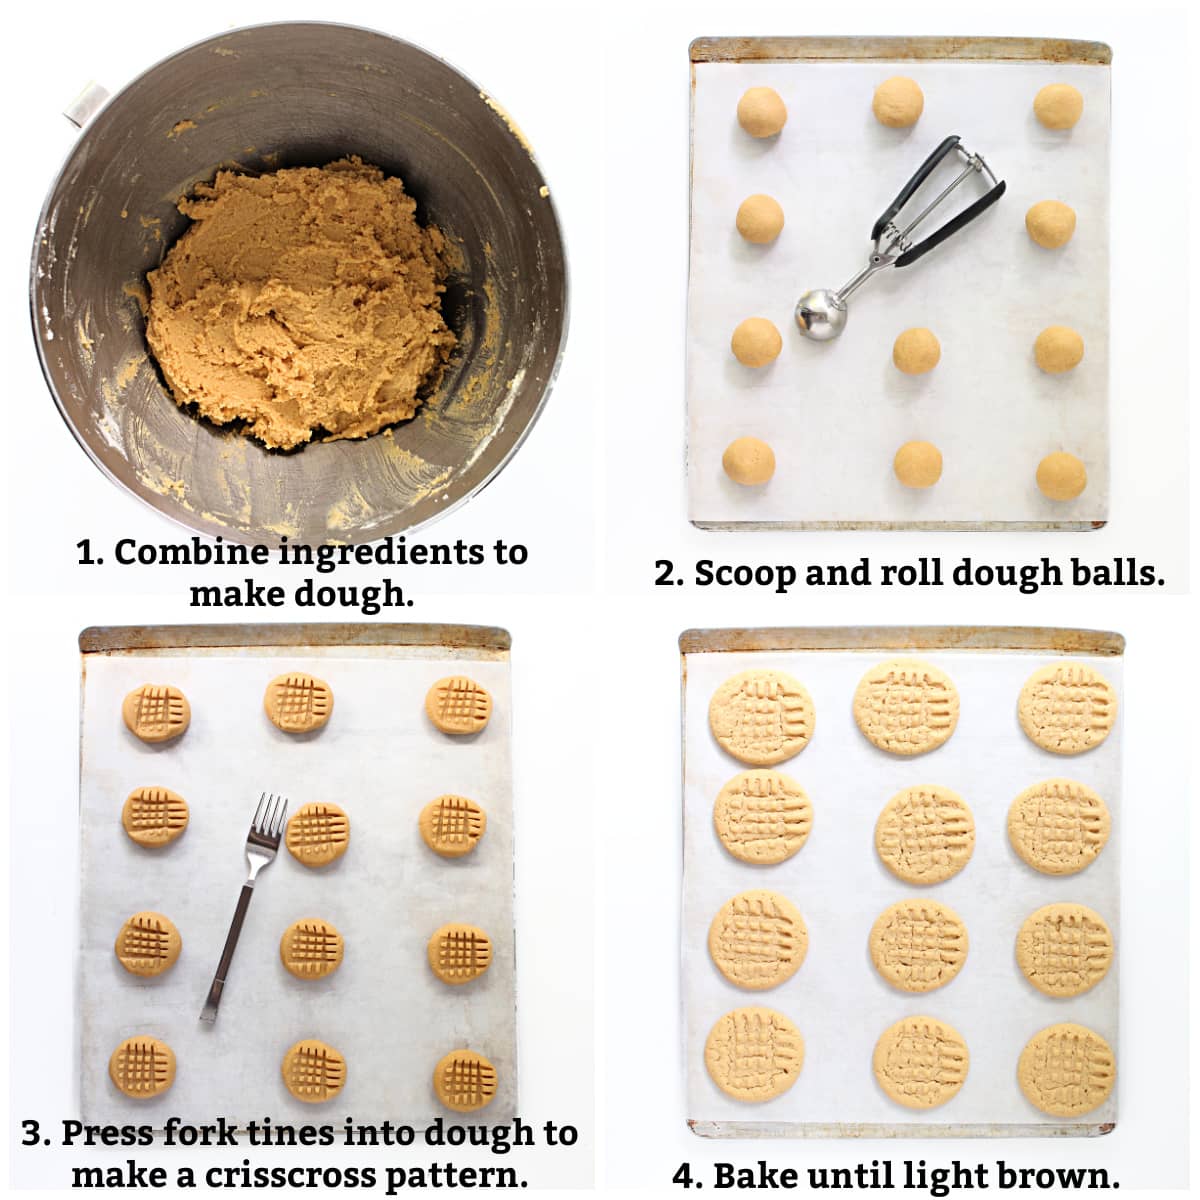 Instructions: make dough, scoop and roll balls, make crisscross pattern, bake until light brown.